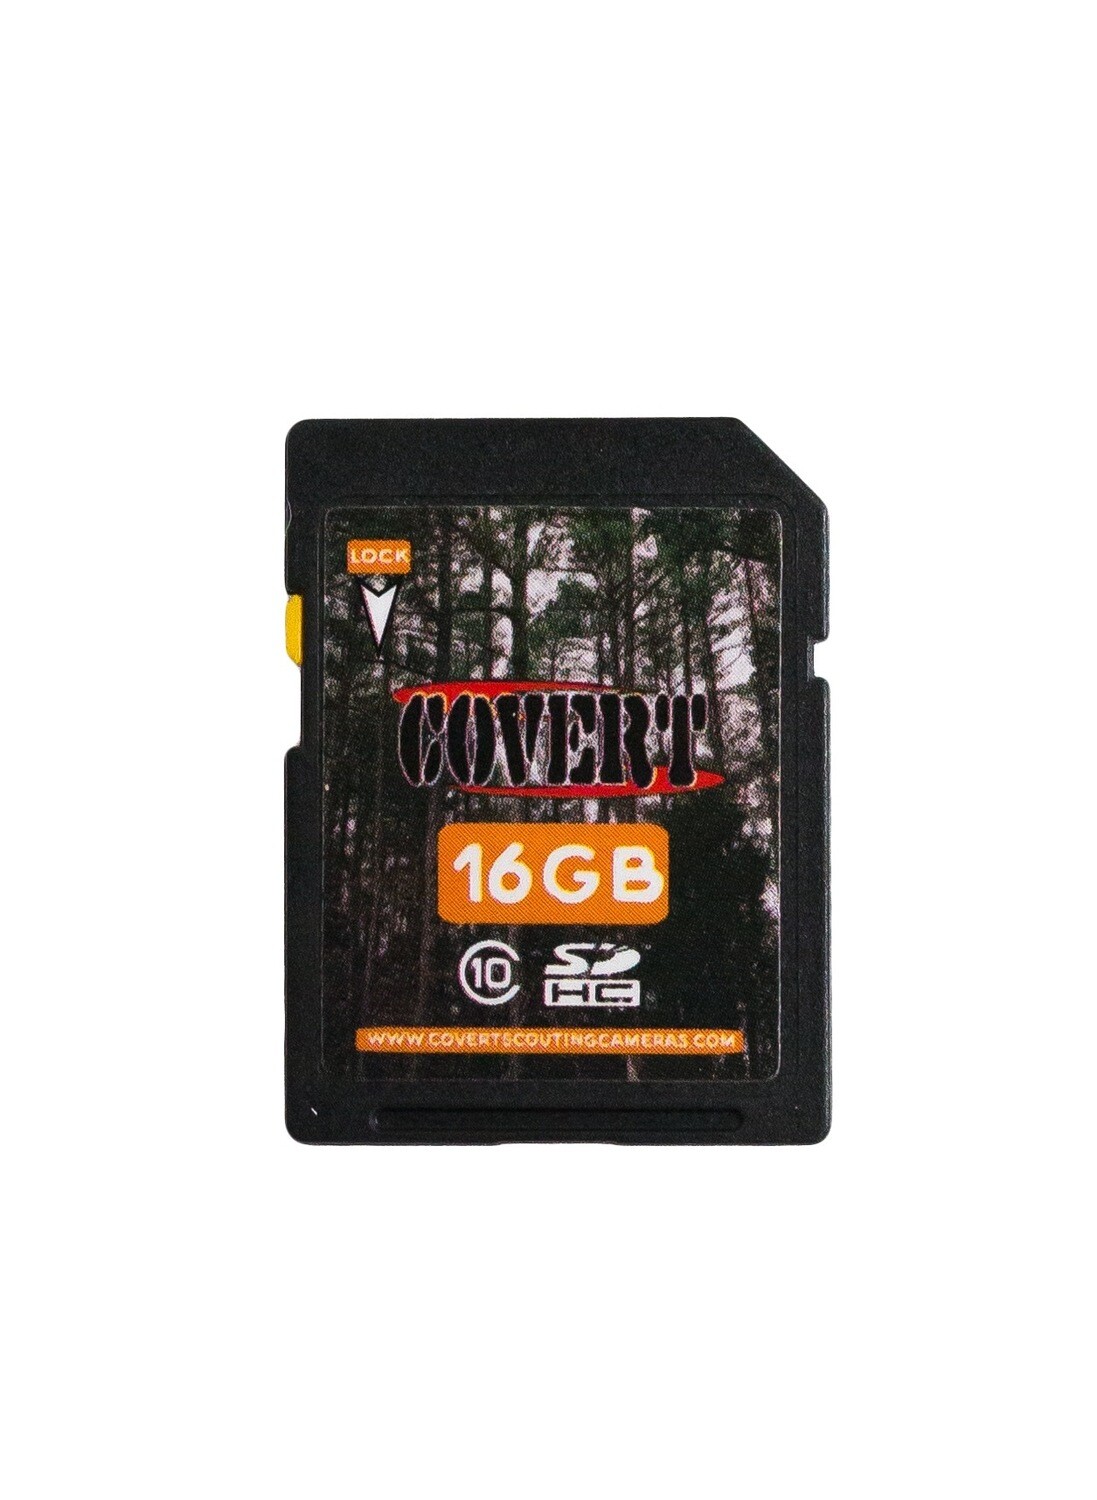 Covert 16 GB SD Card